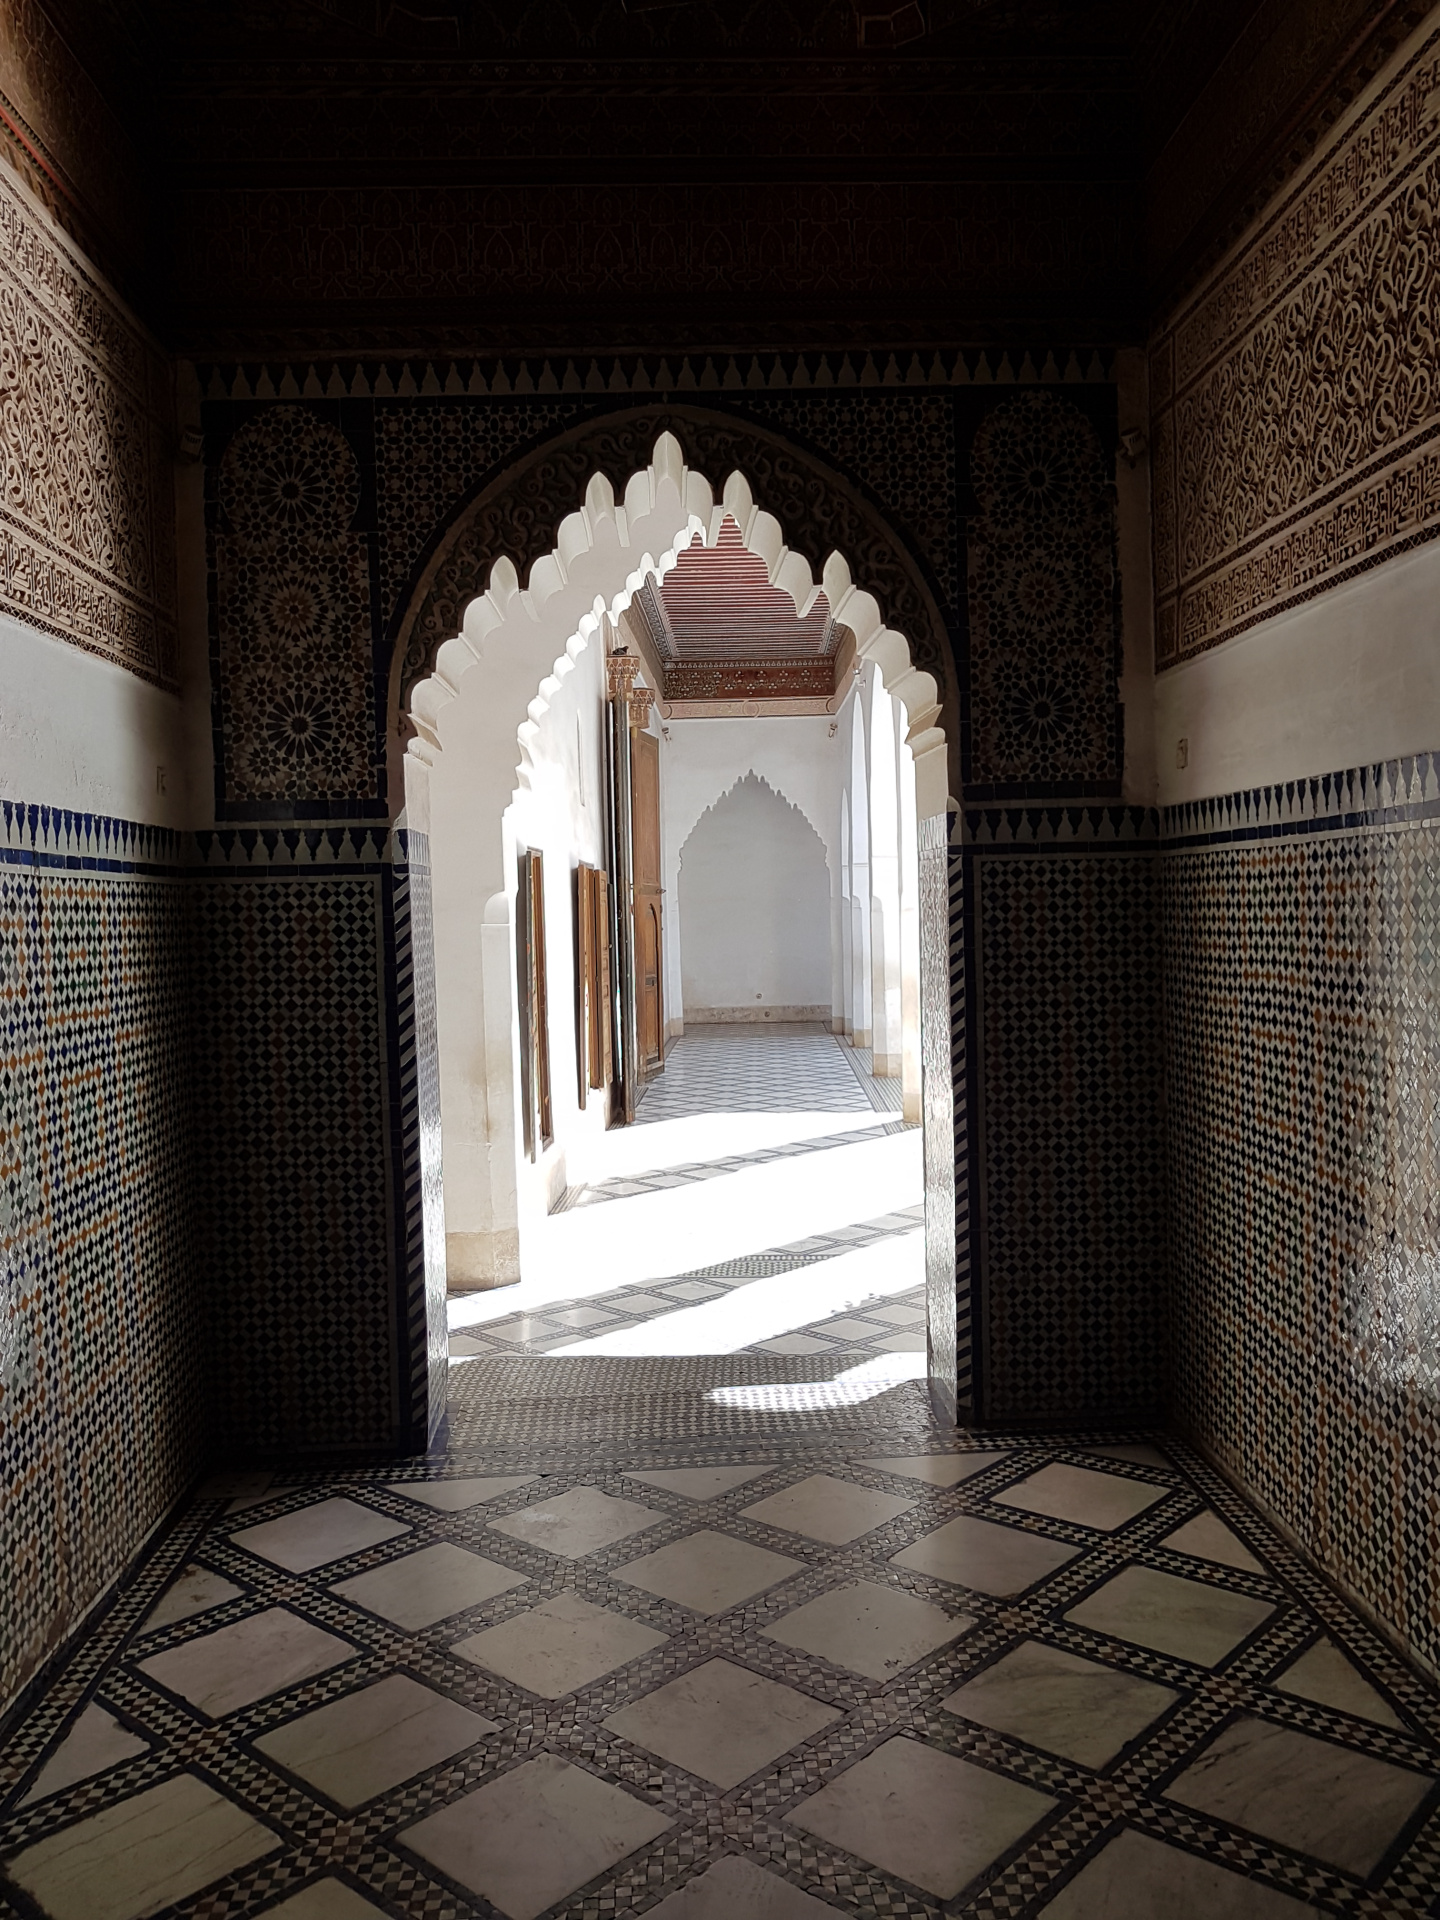 20180314-092916-Bahia_Palace-Marrakech-SJ-r.jpg